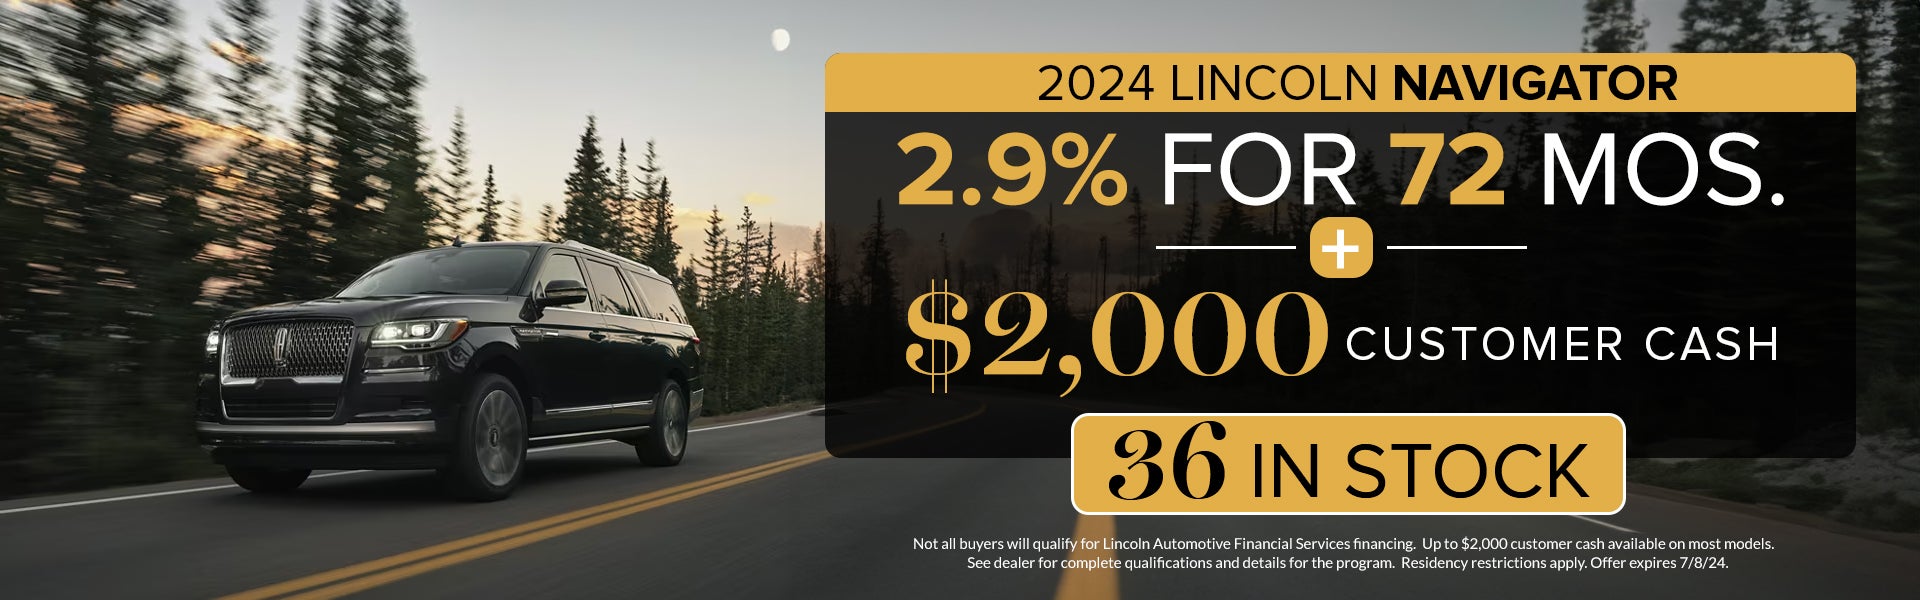 2024 Lincoln Navigator Deals